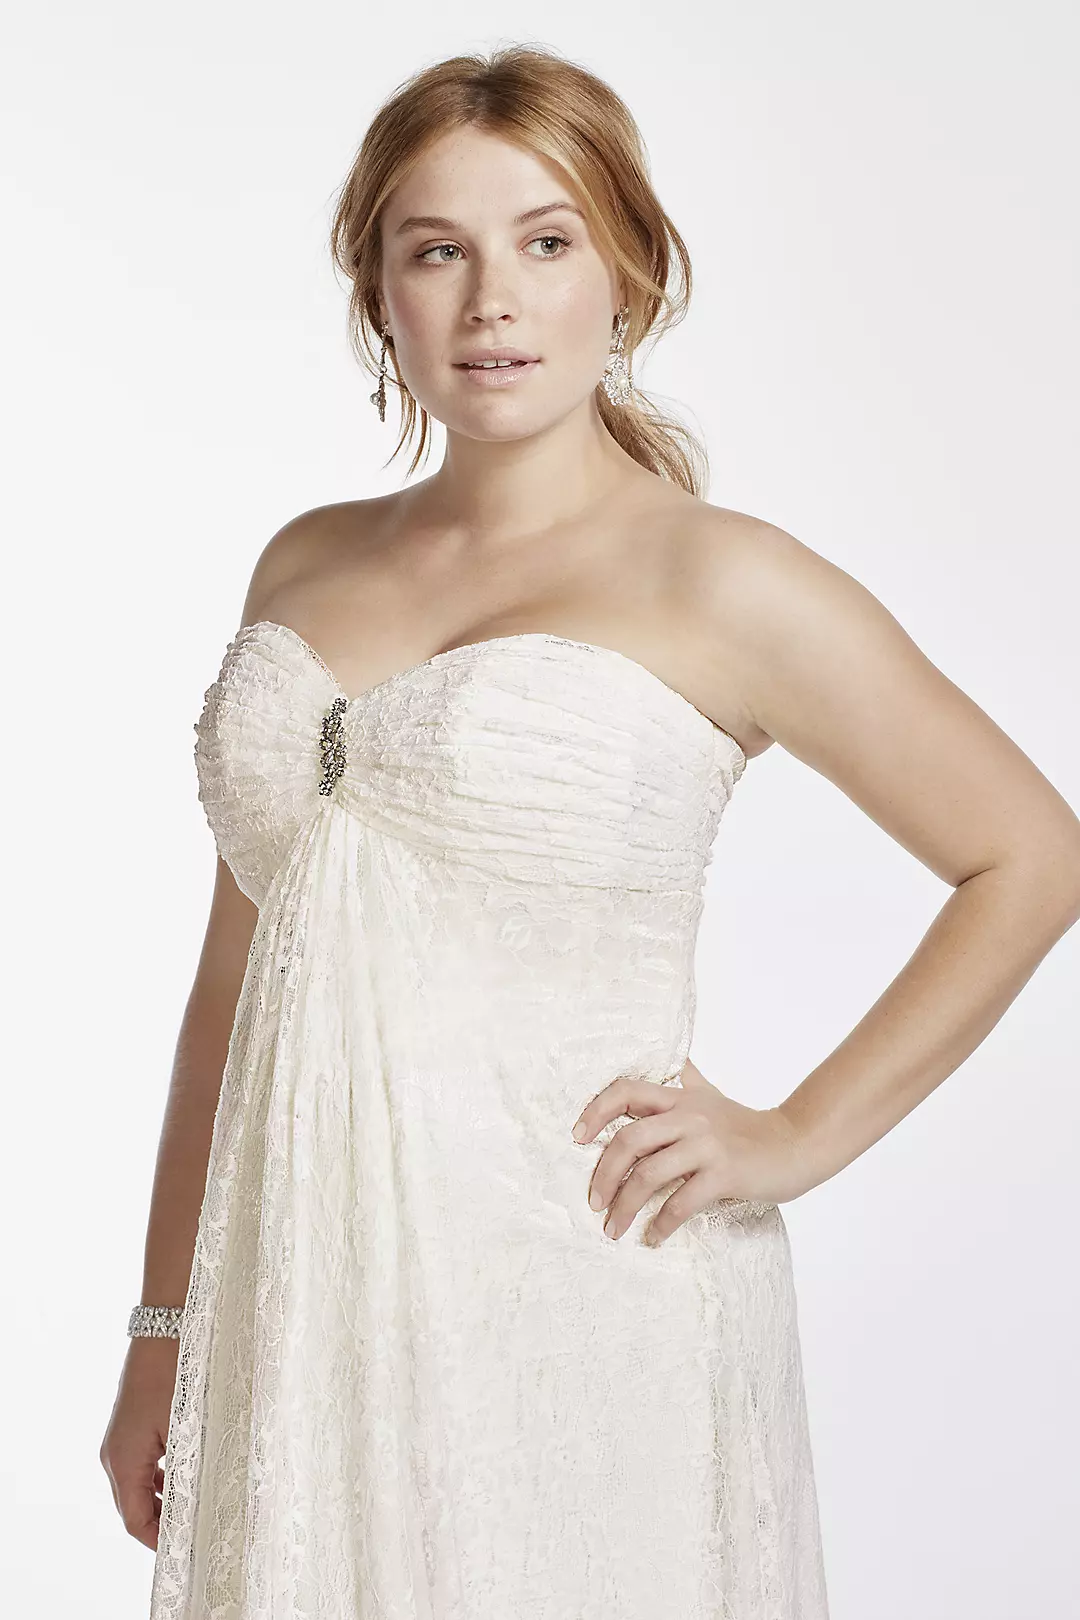 Strapless A-Line Wedding Dress with Empire Waist Image 3